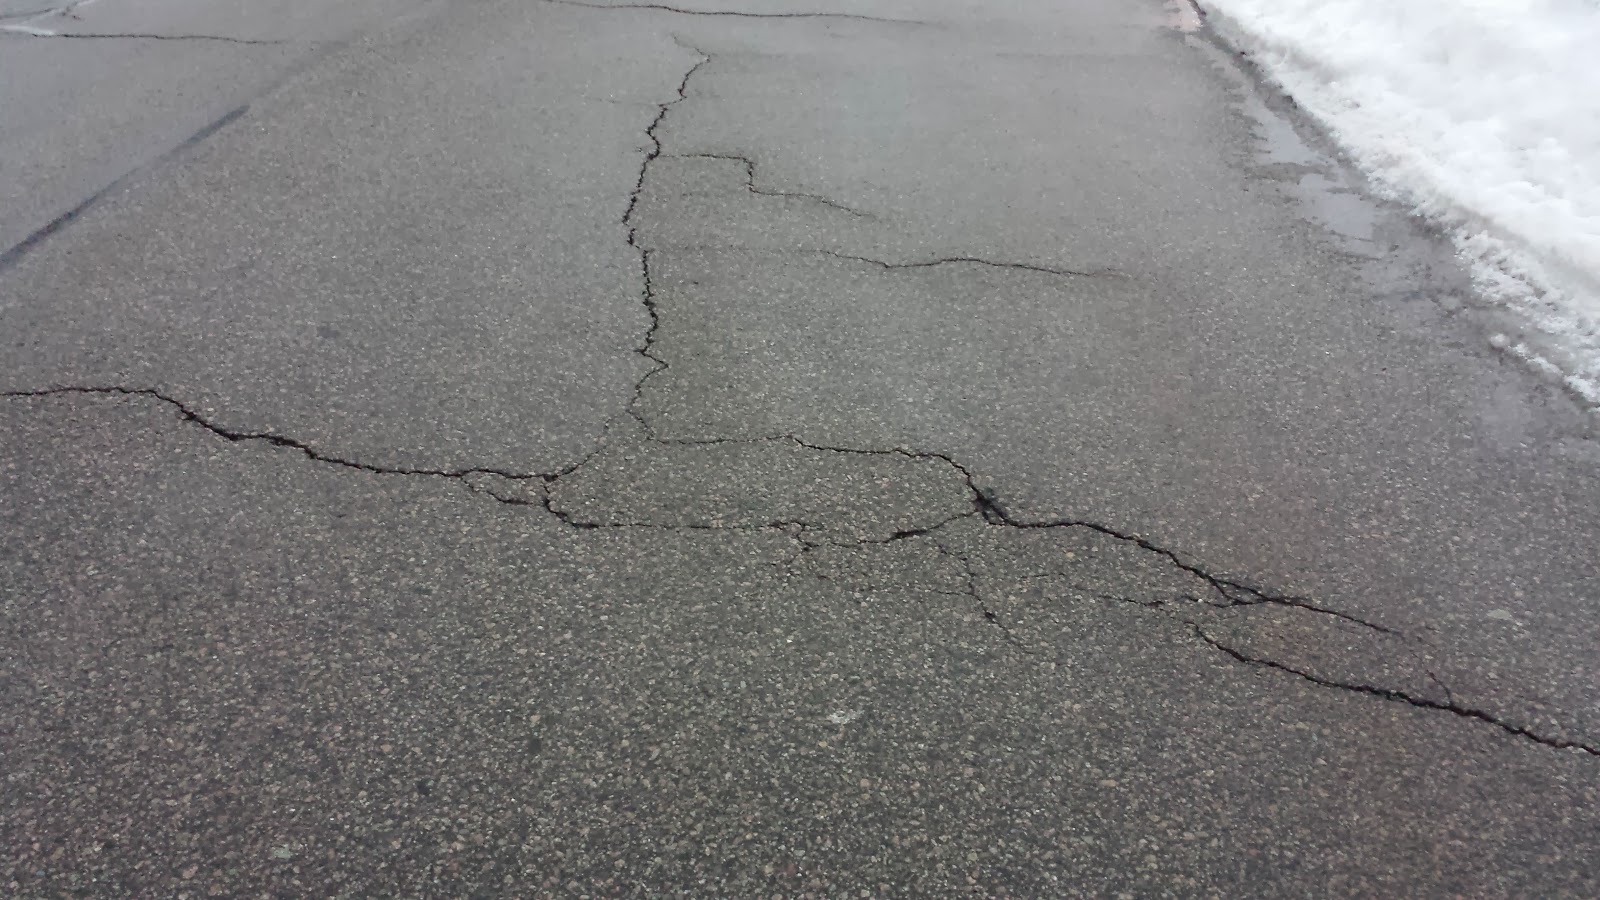 cracks like these may eventually create a pothole